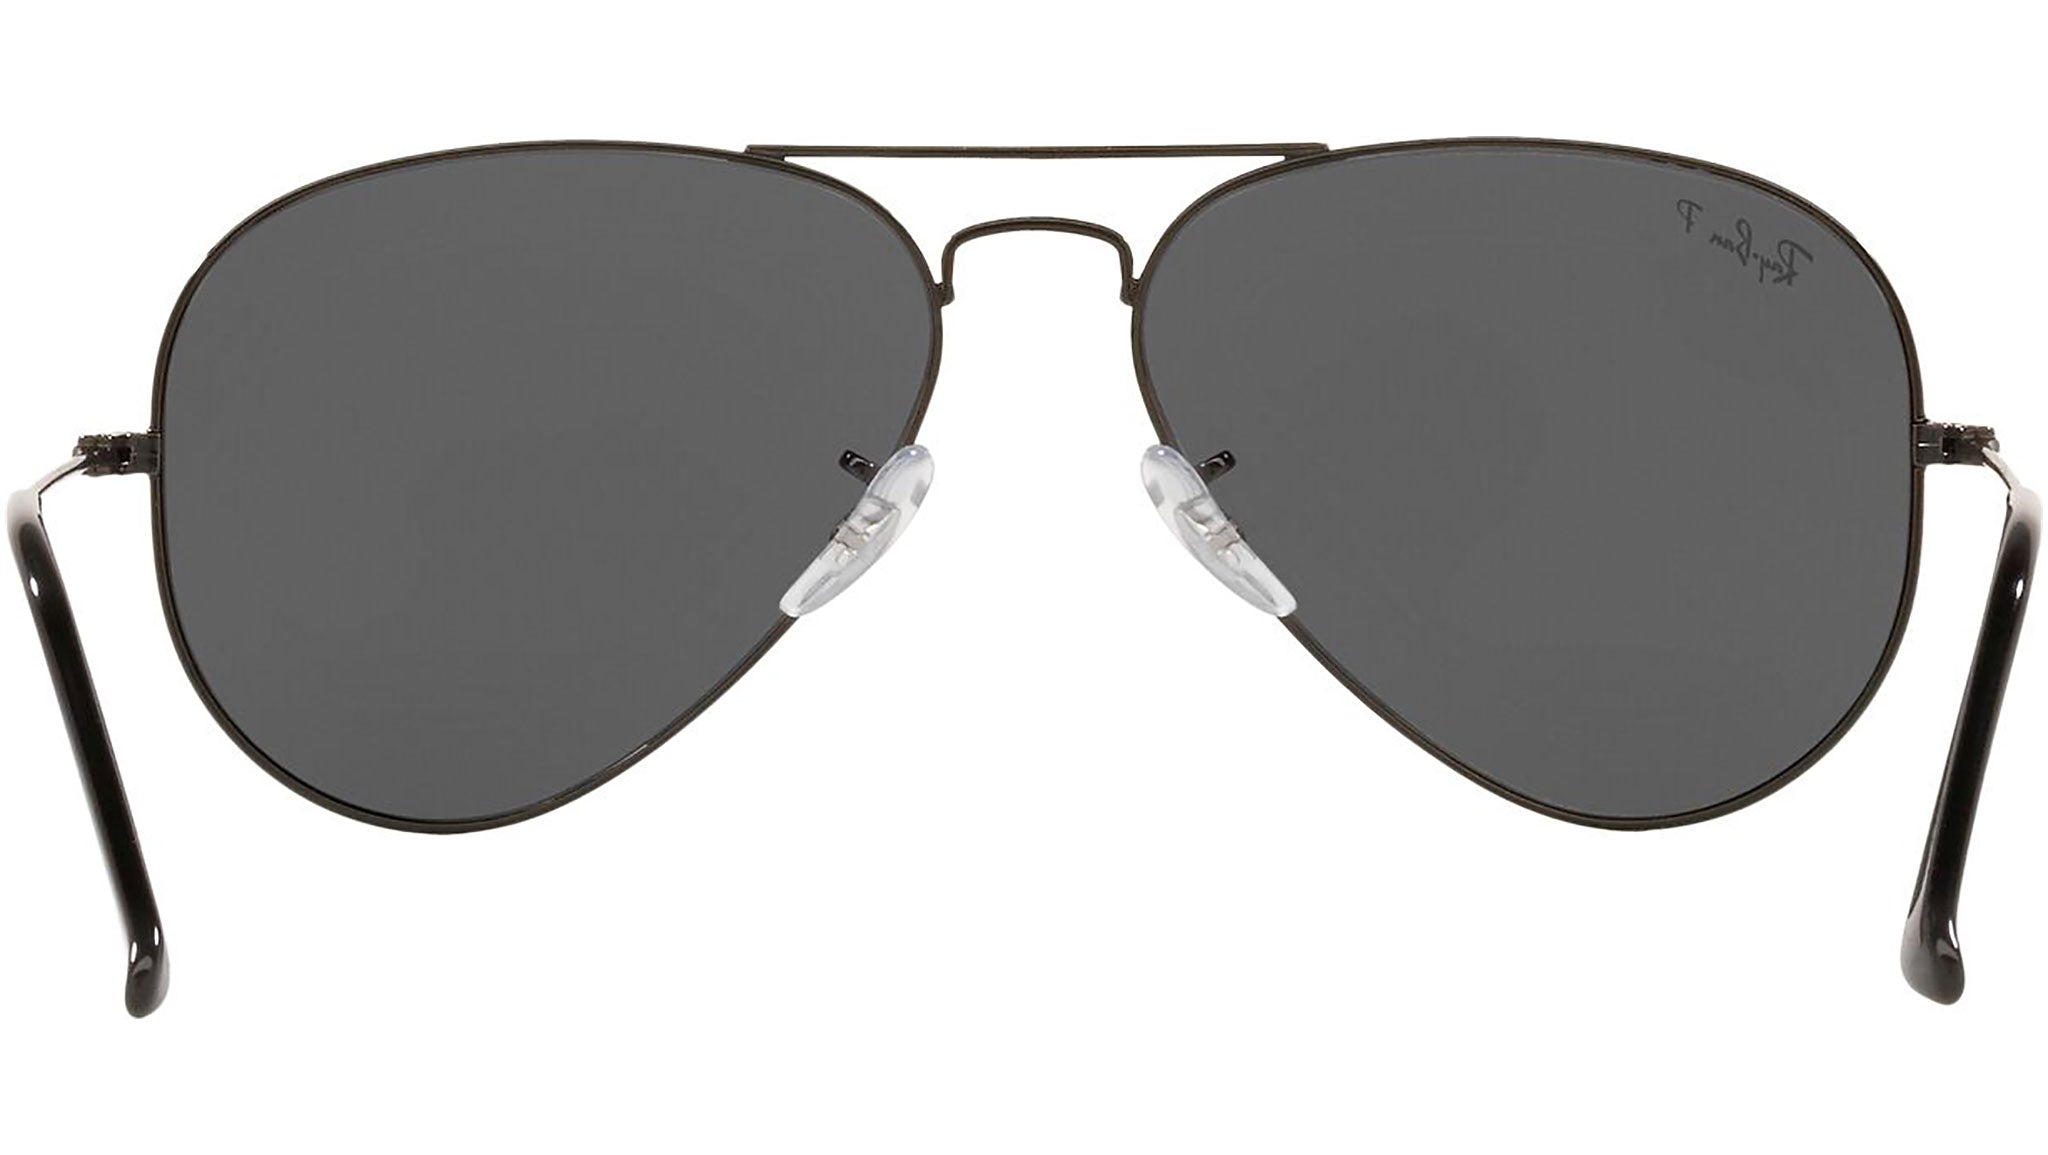 Buy IFLASH Polarized Aviator Sunglasses lightweight Stylish Glasses for Men  Women UV Protection Glass Lens at Amazon.in